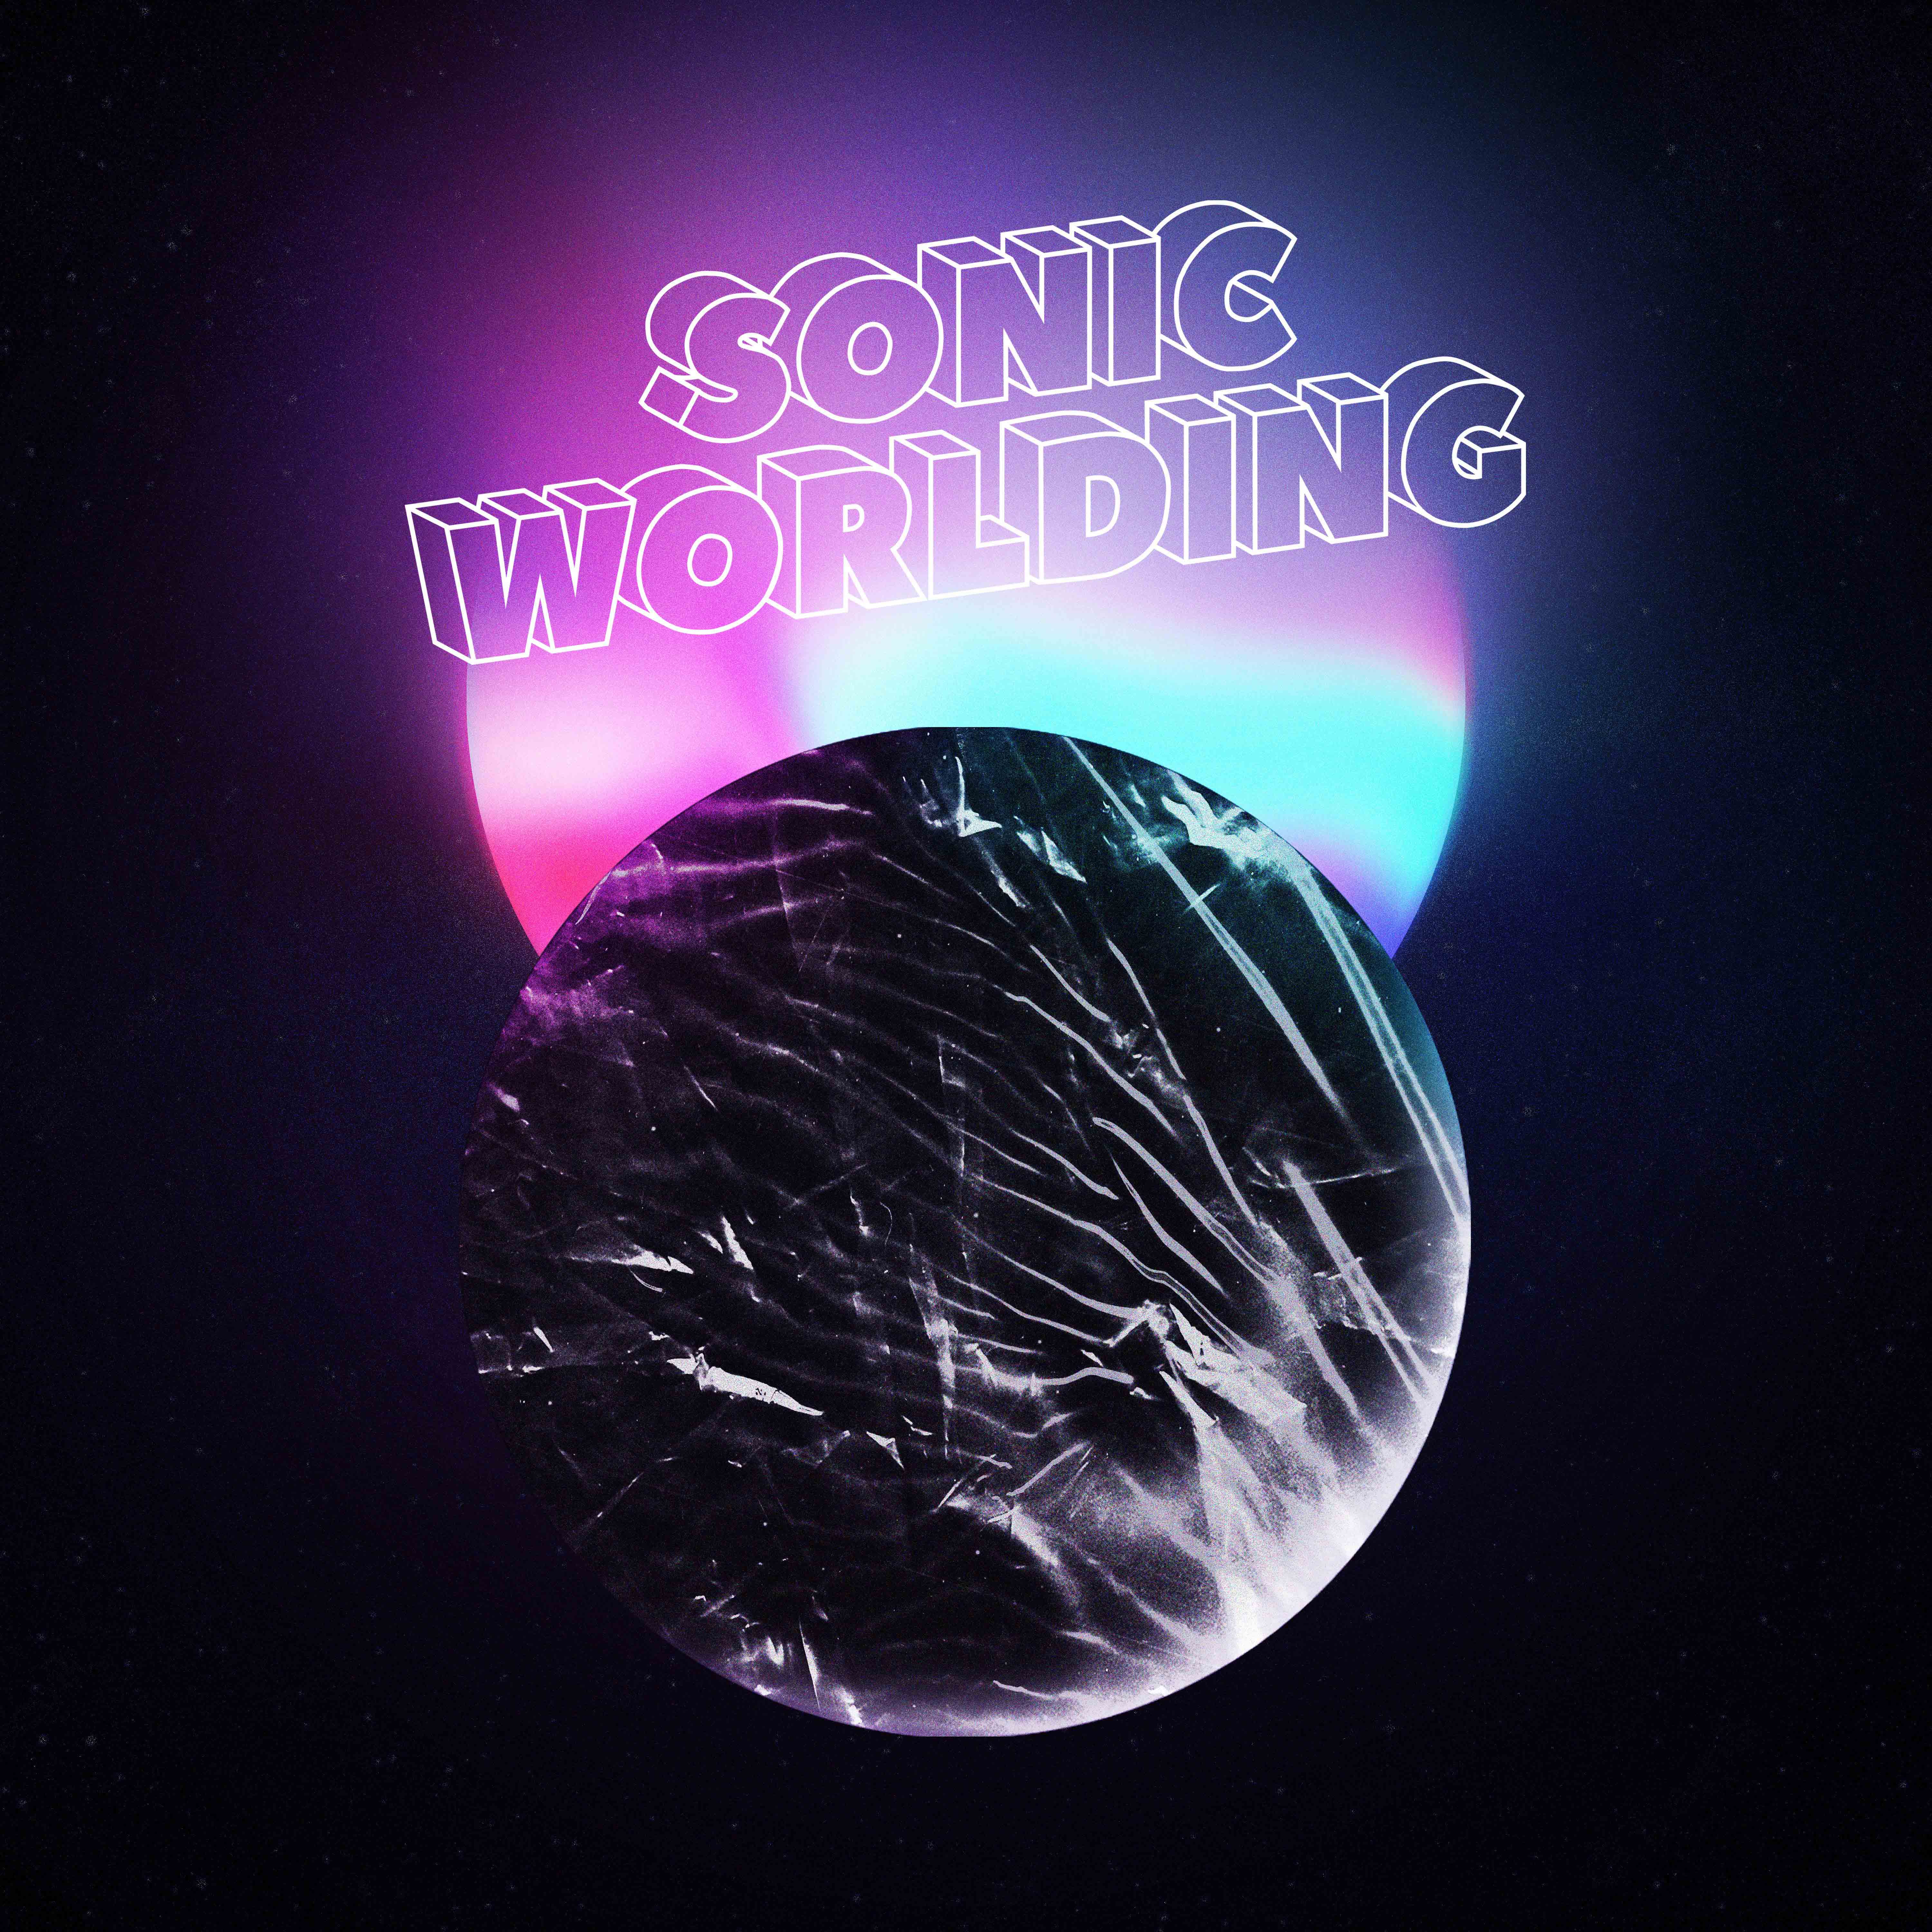 Sonic Worlding